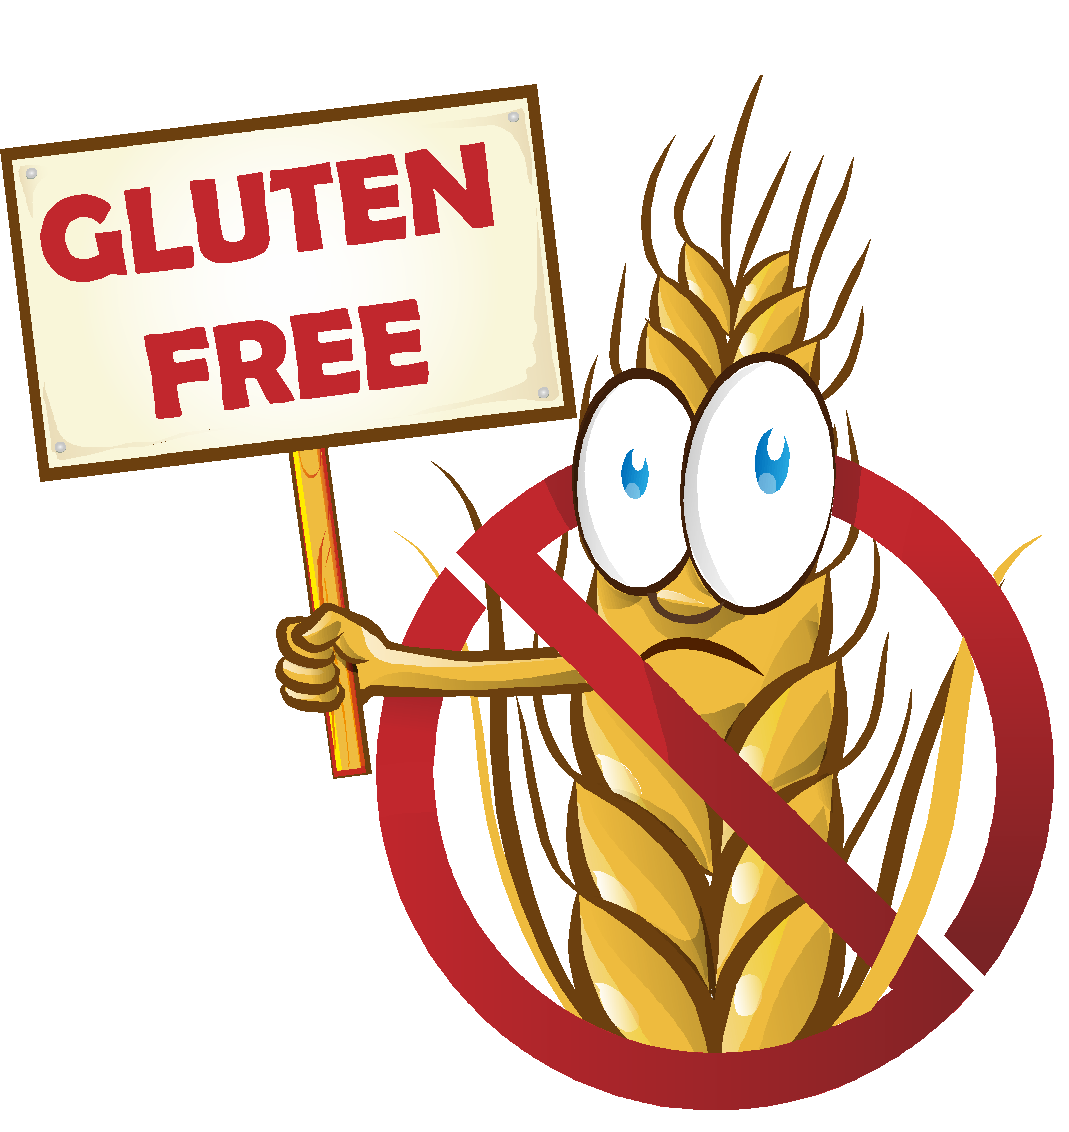 Is a Gluten Free Nipple Balm Important?